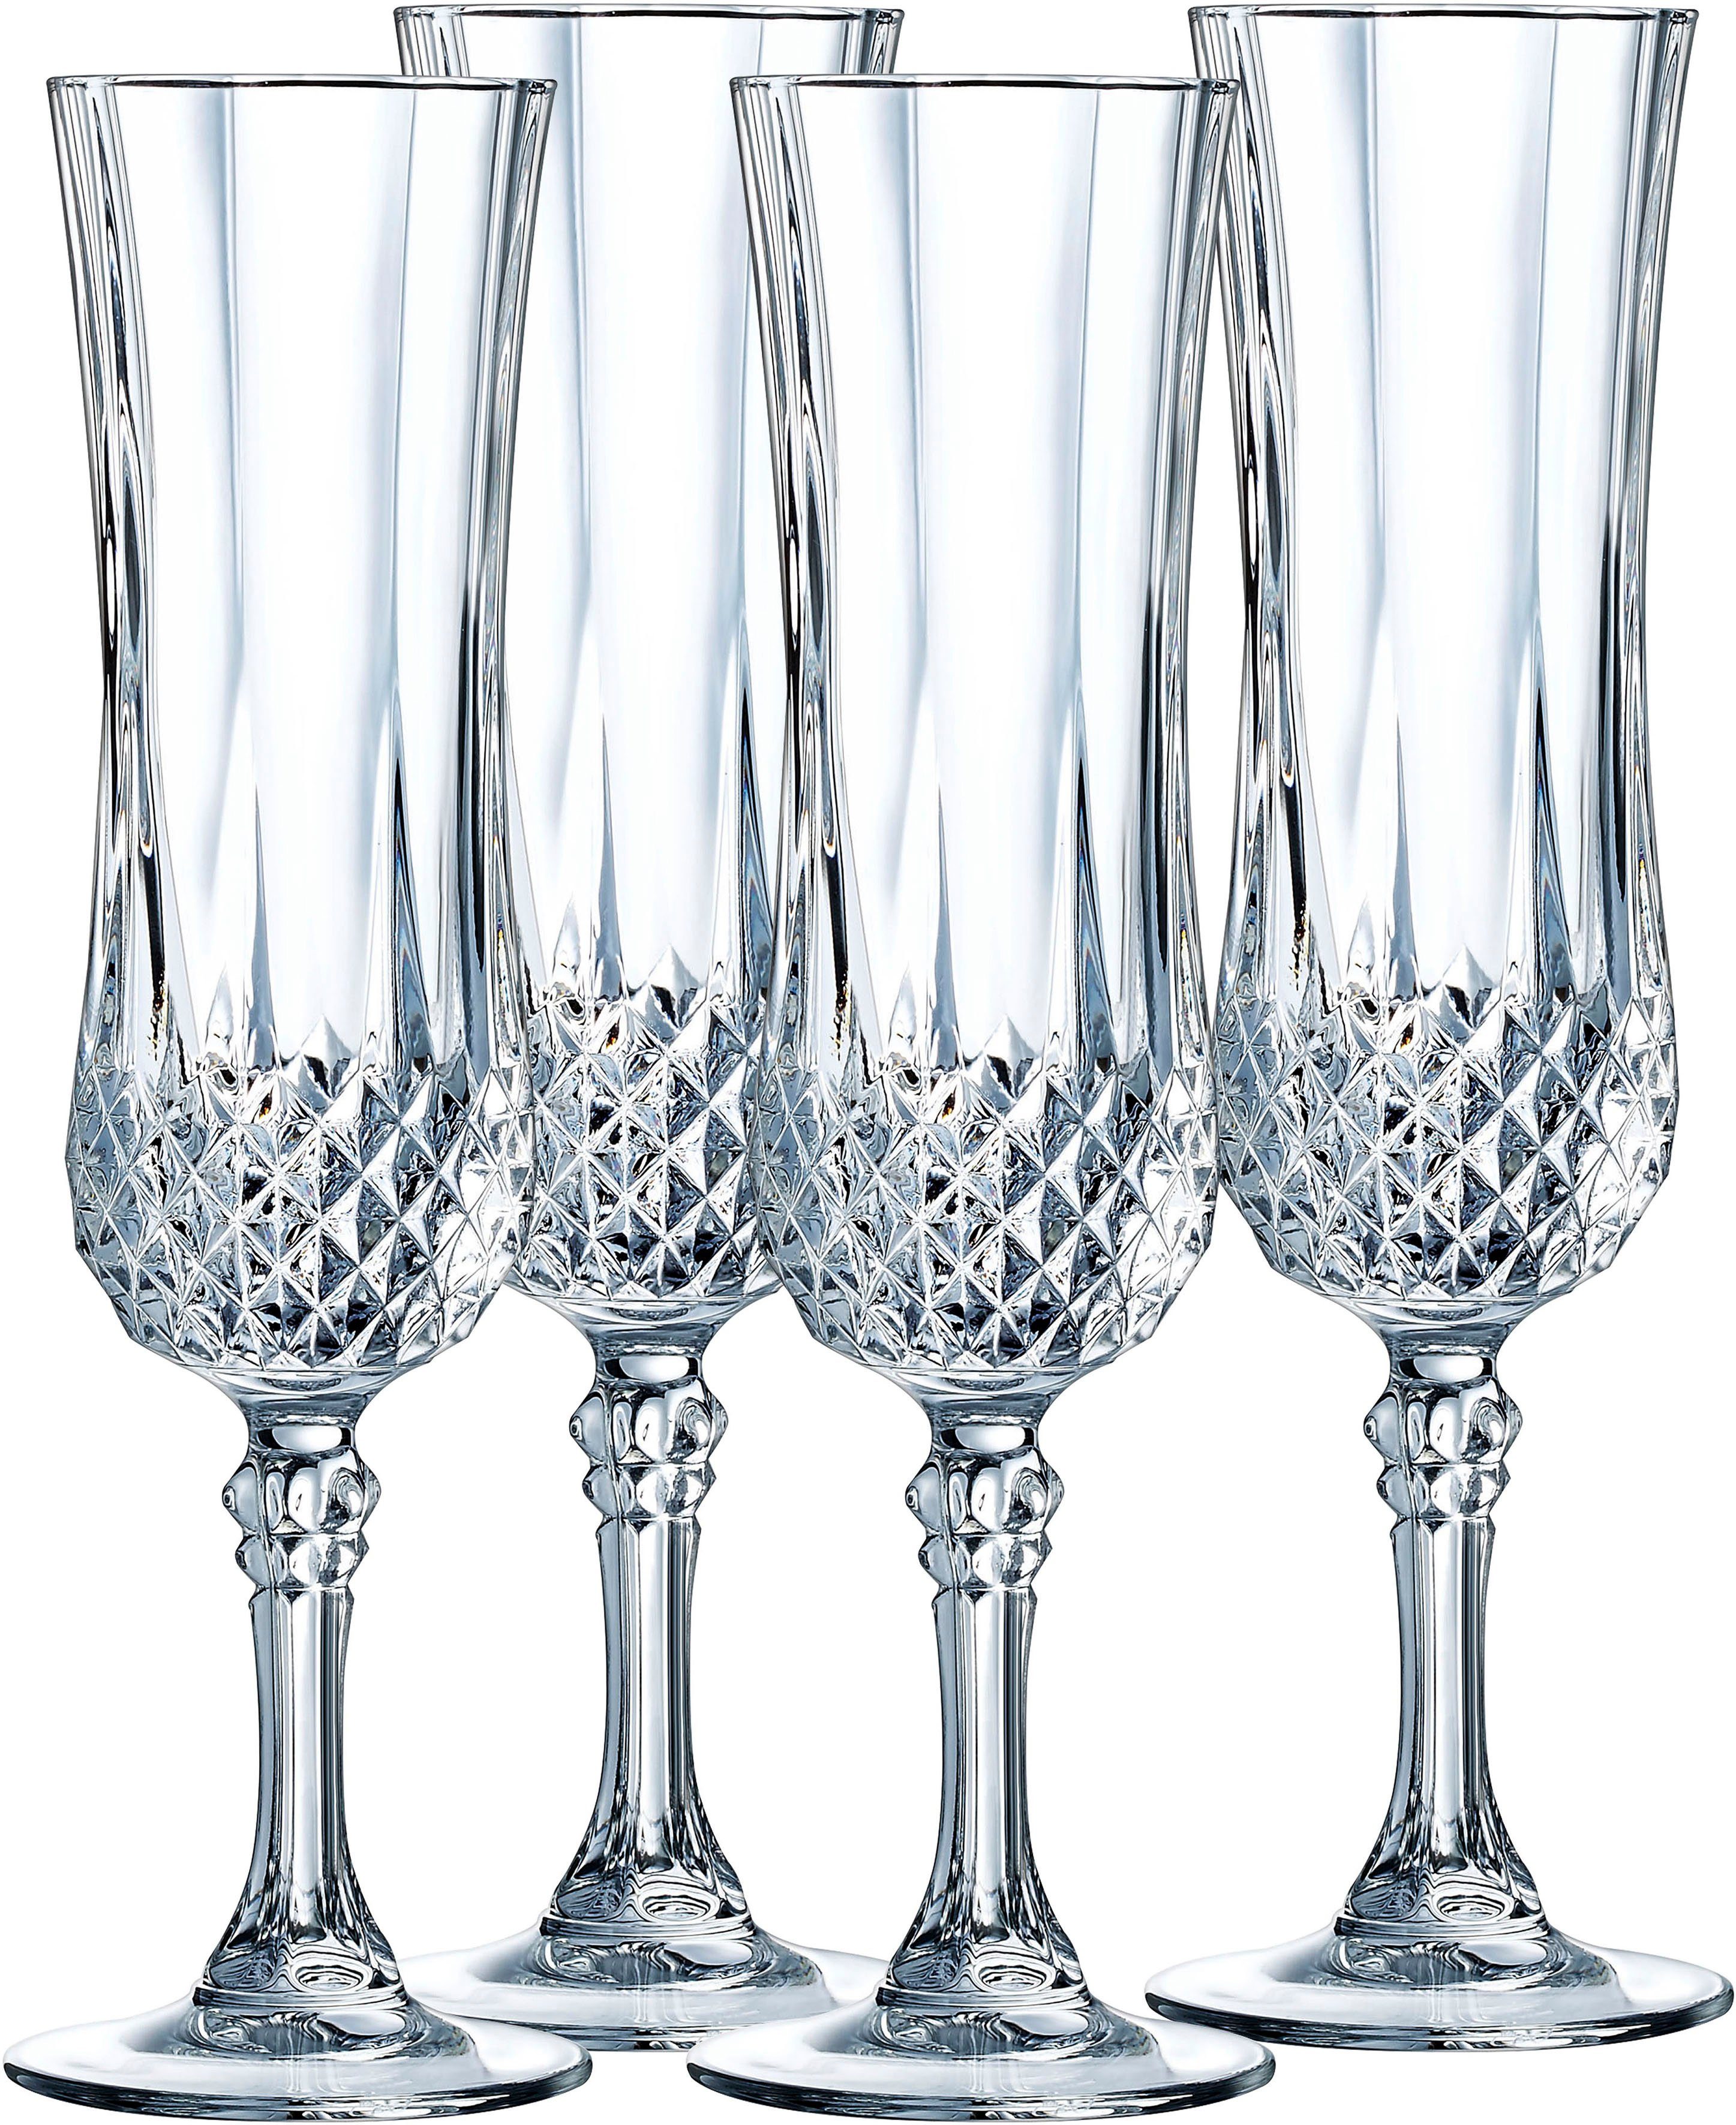 CreaTable Luminarc Sektglas Trinkglas Longchamp Eclat, Glas, Gläser Set, sehr hochwertiges Kristallinglas